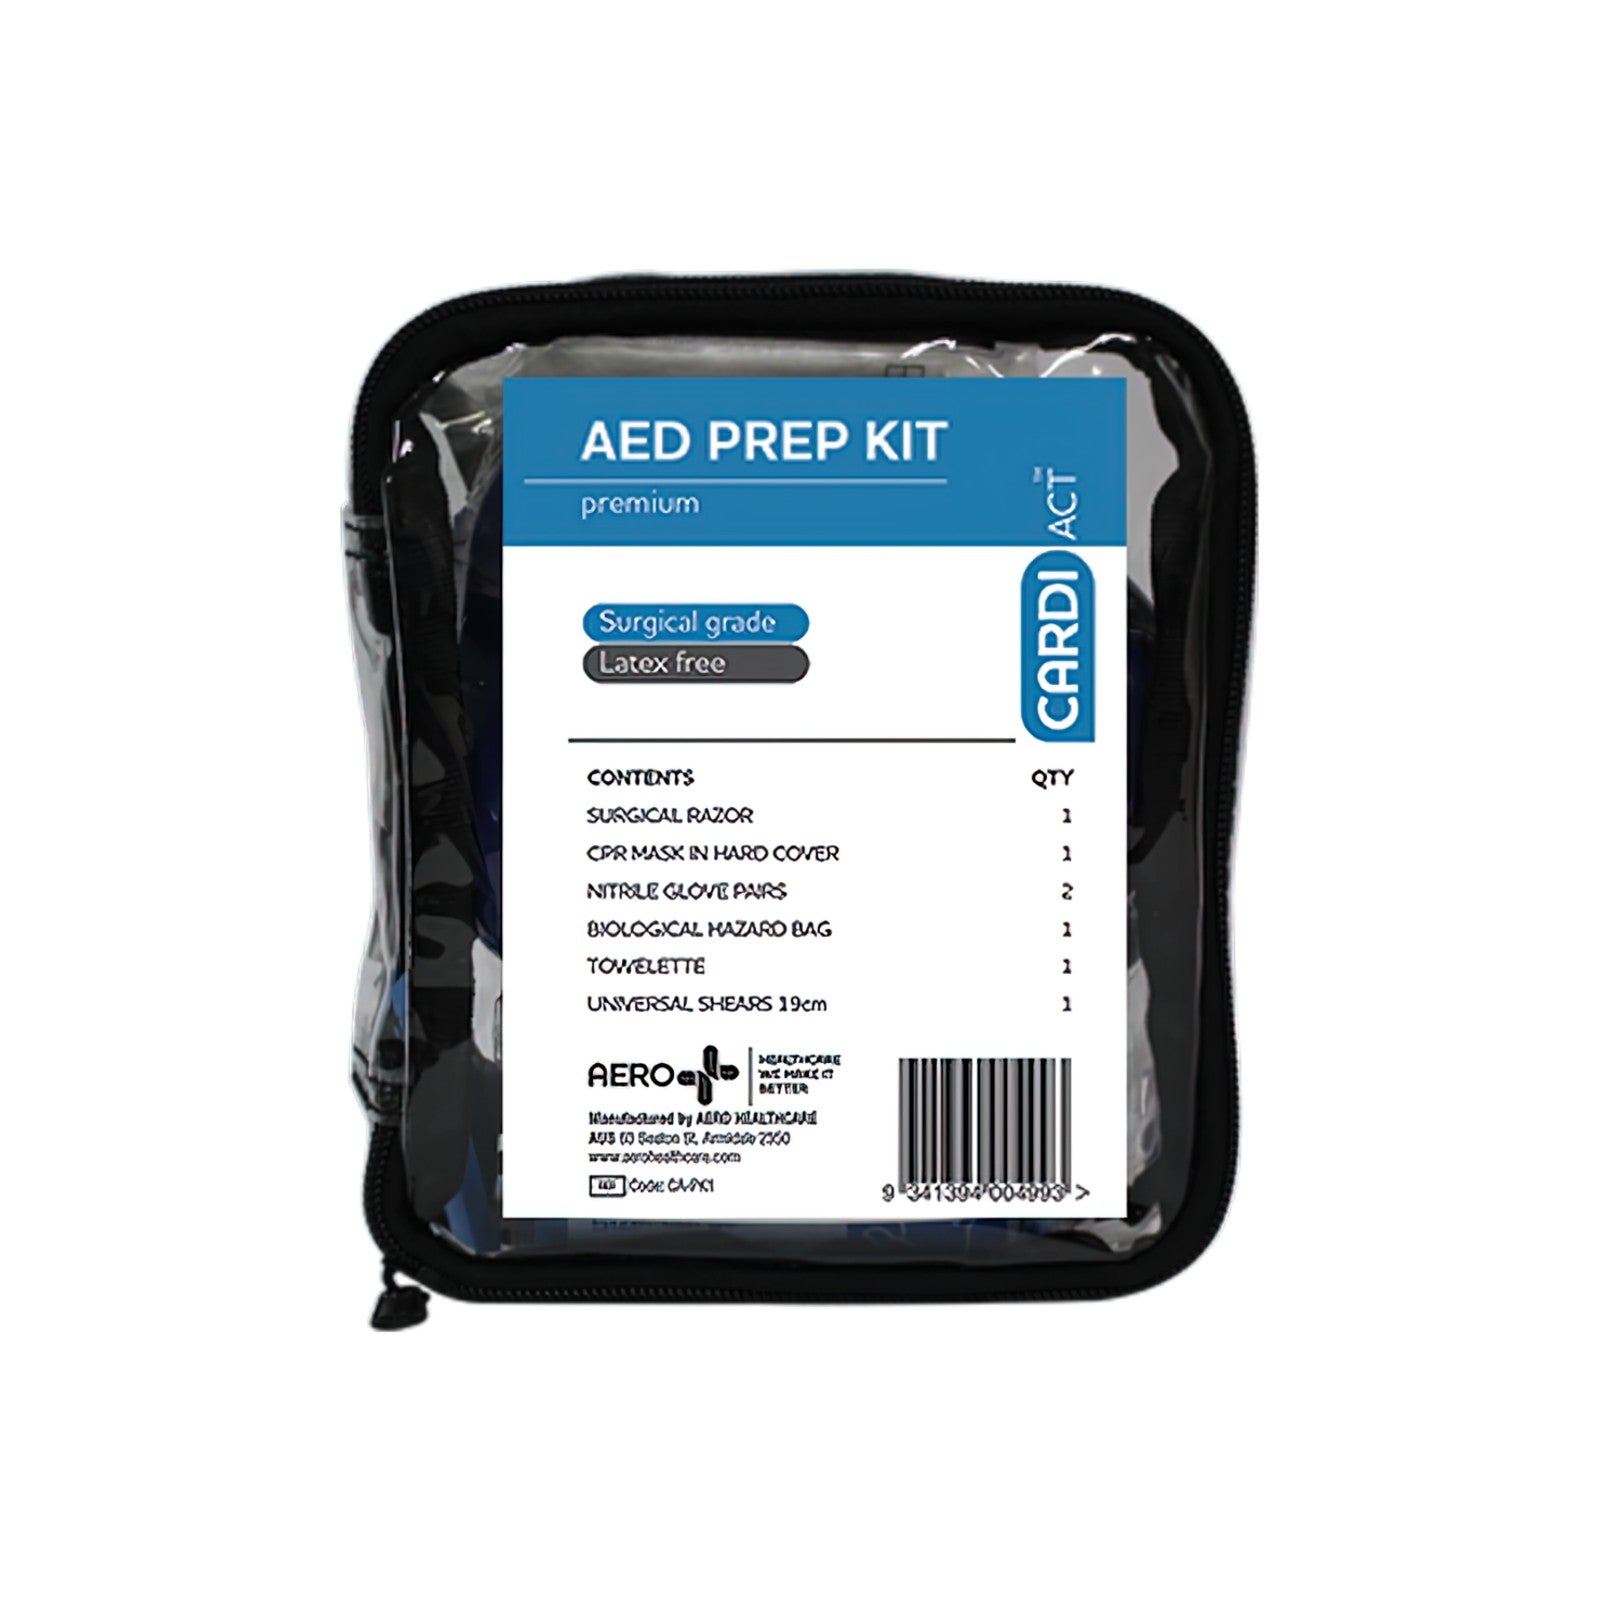 CARDIACT AED Premium Prep Kit